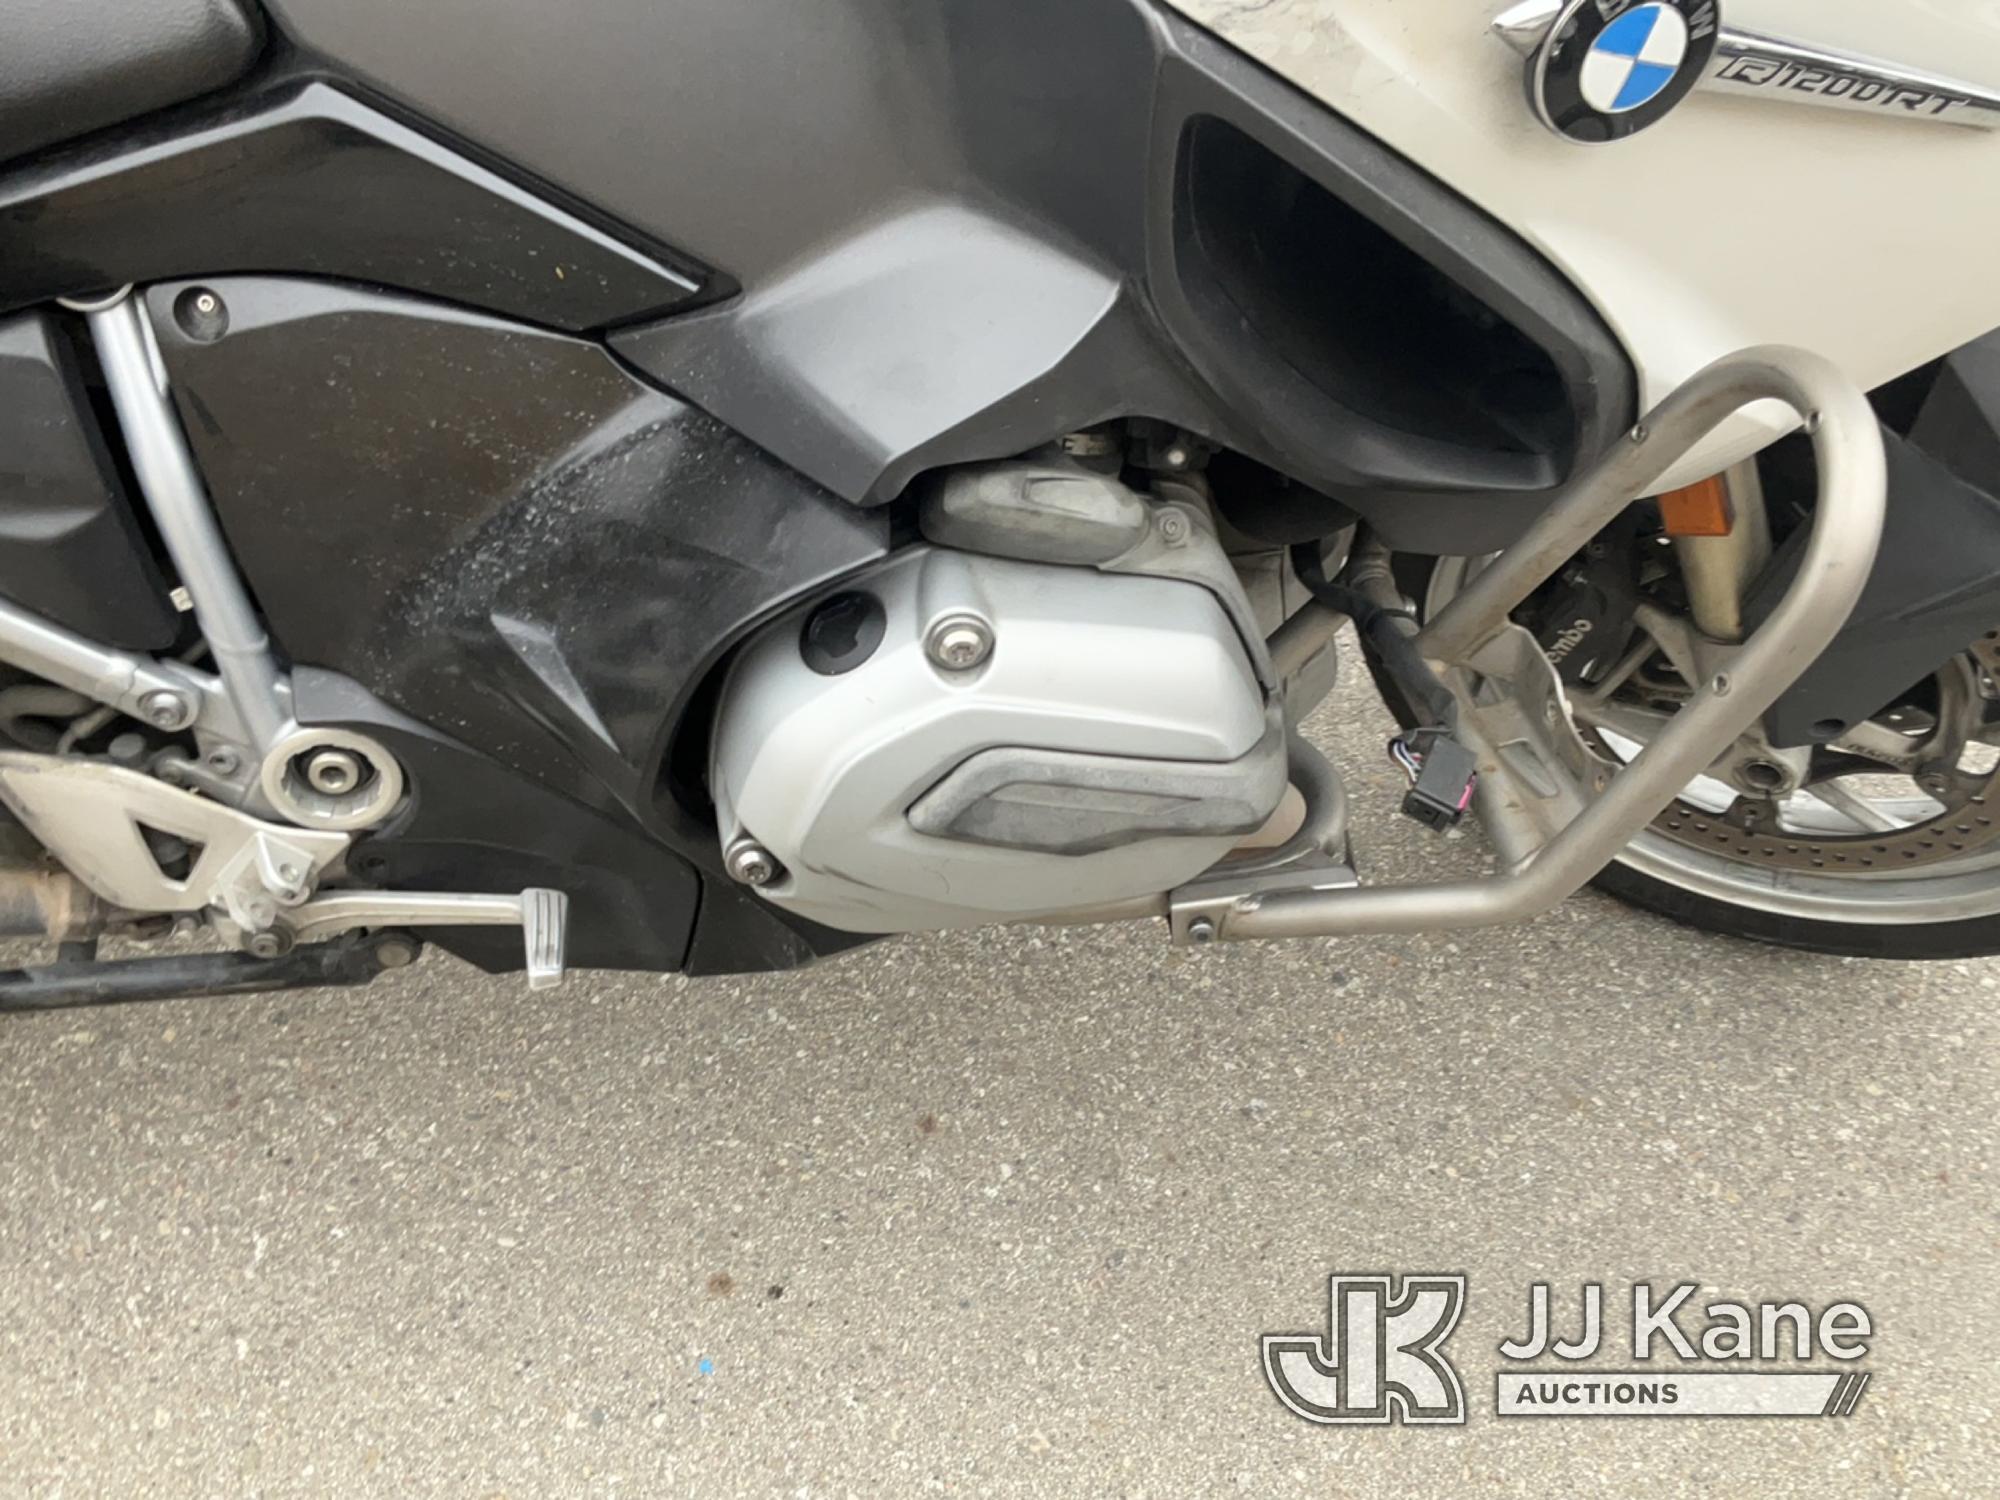 (Jurupa Valley, CA) 2015 BMW R1200RT Motorcycle Not Running , No Key , Stripped Of Parts